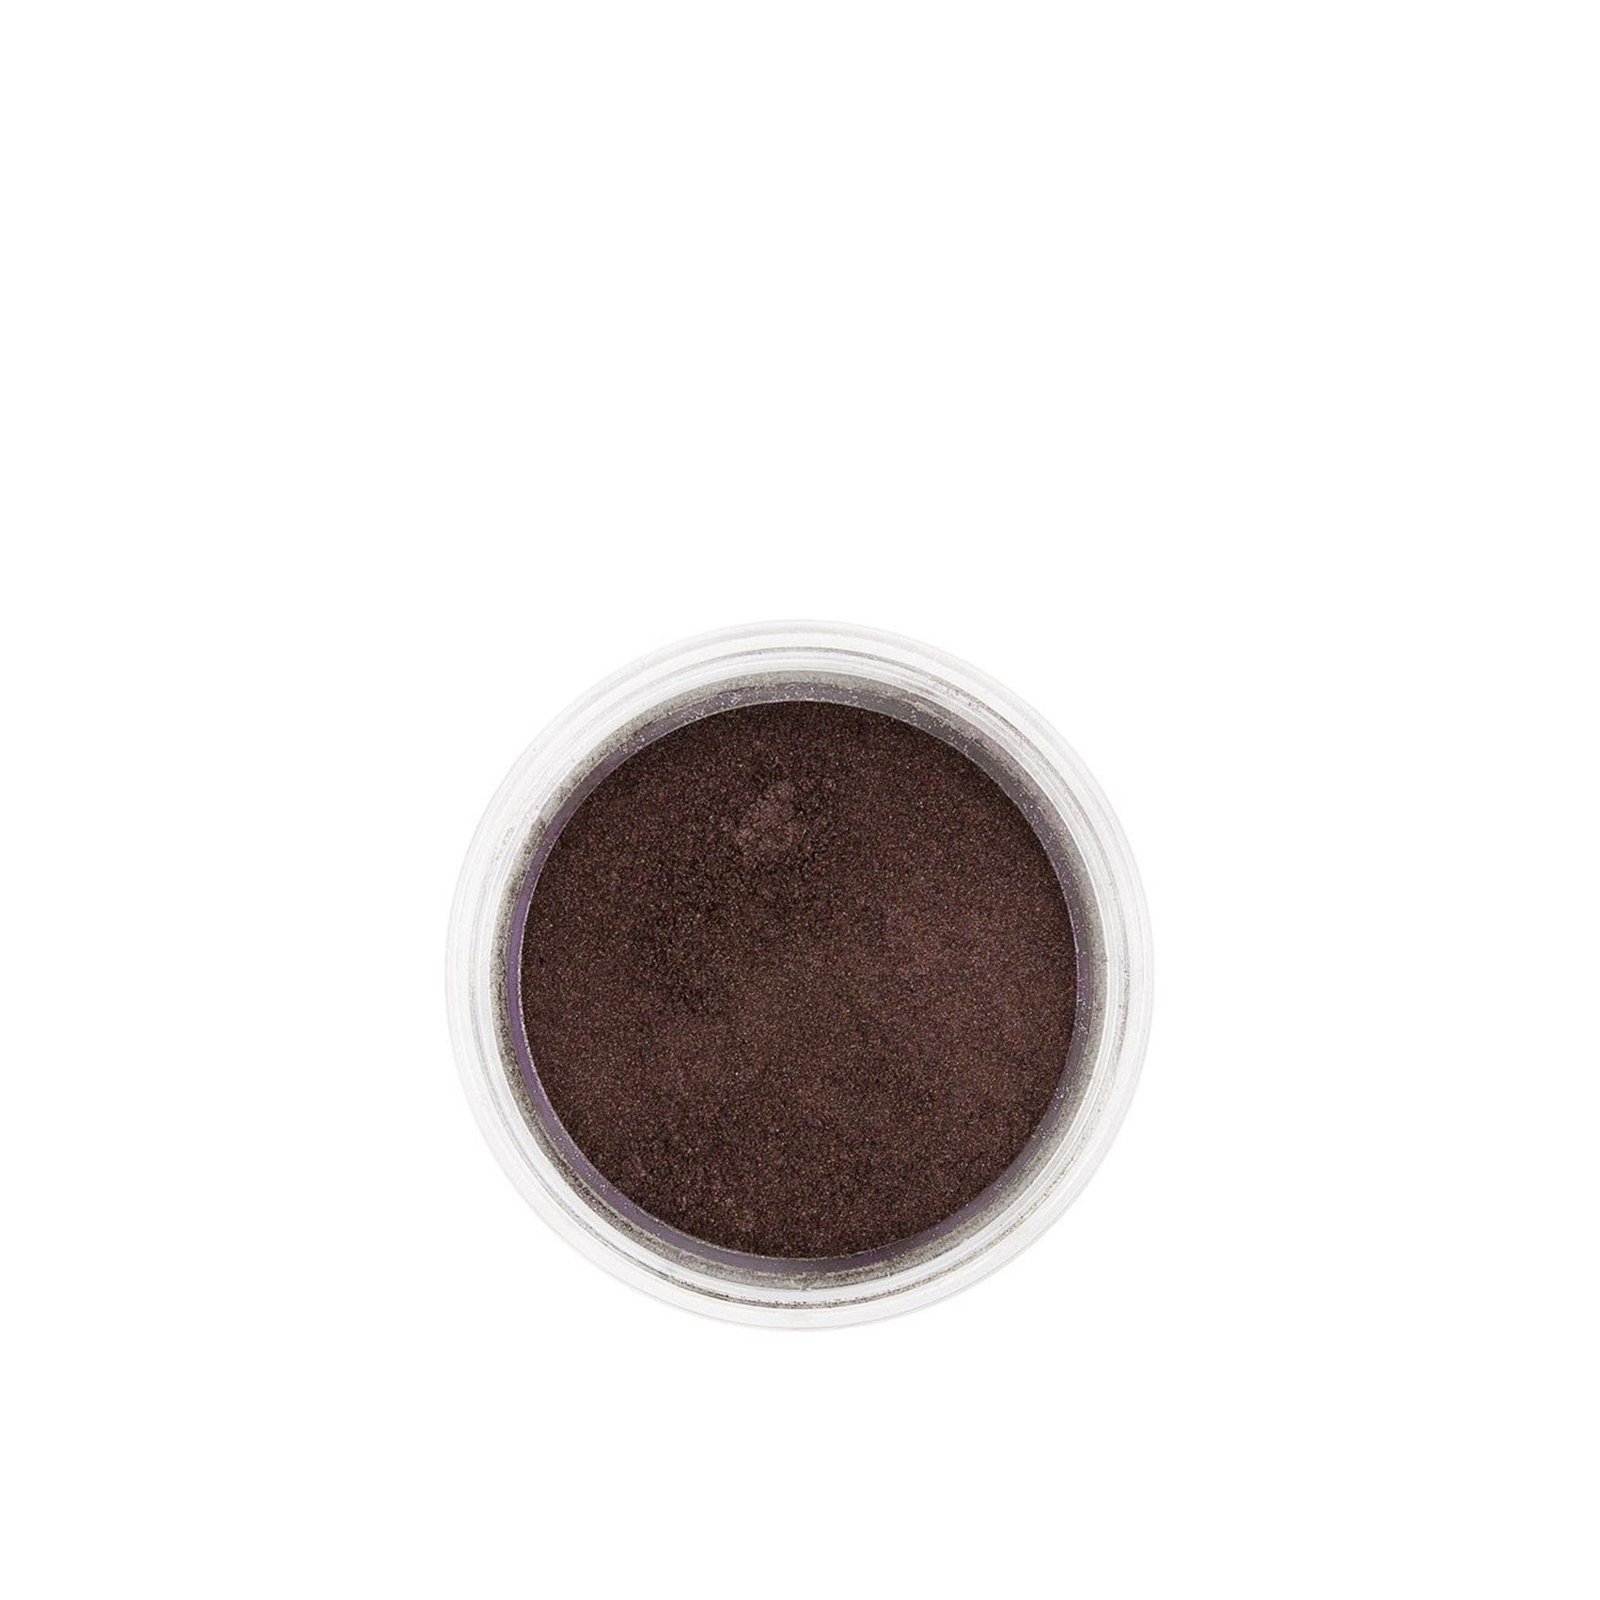 Bellapierre Cosmetics Shimmer Powder SP079 Antiqa 2g (0.07oz)